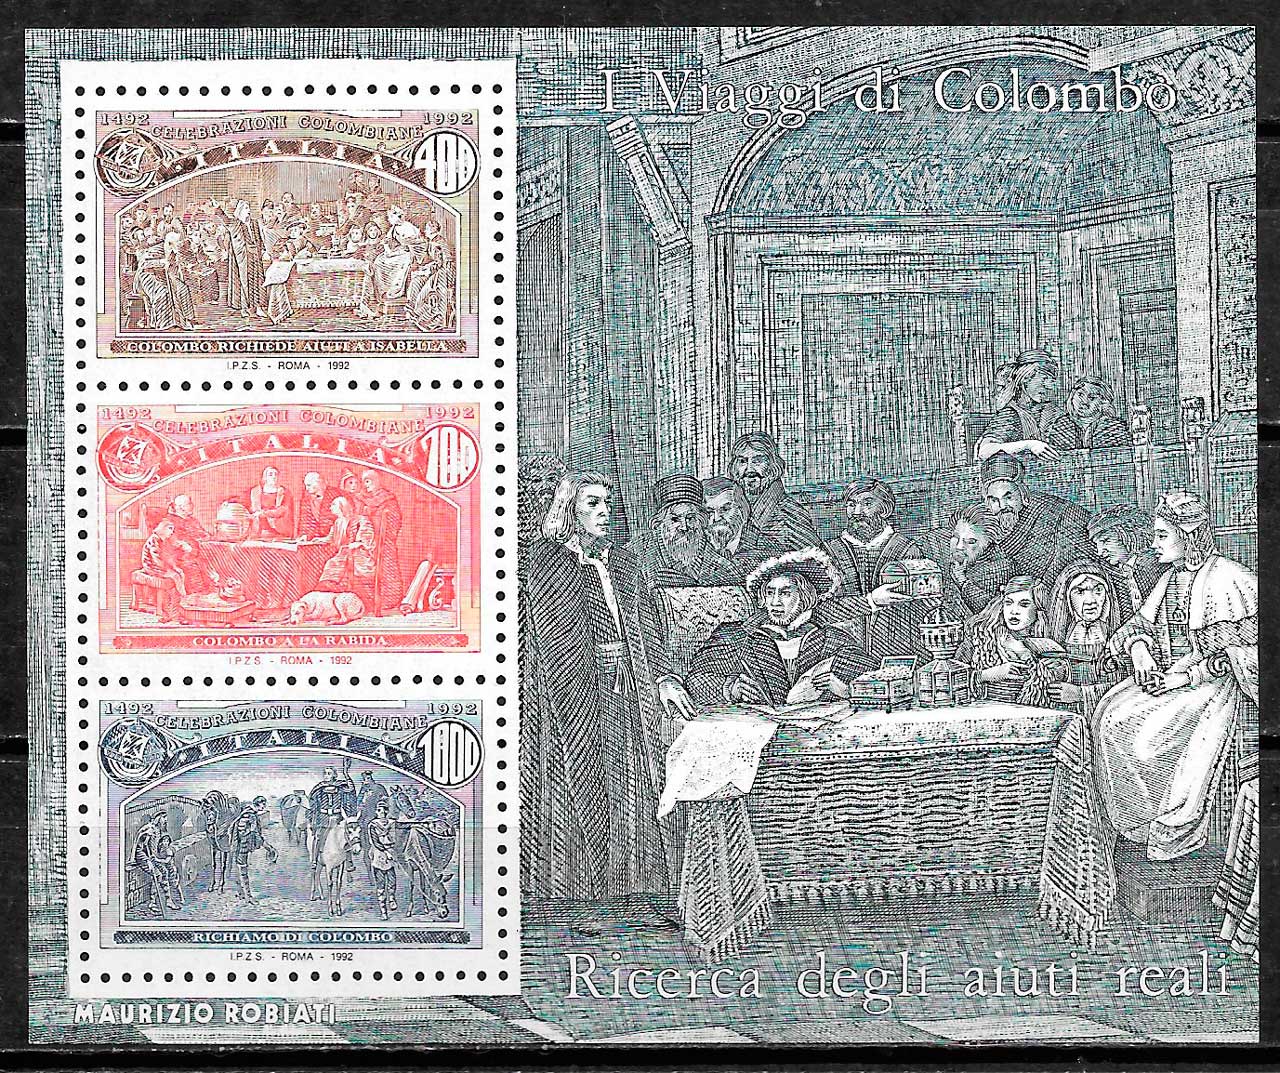 coleccion sellos emisiones conjuntas Italia 1992